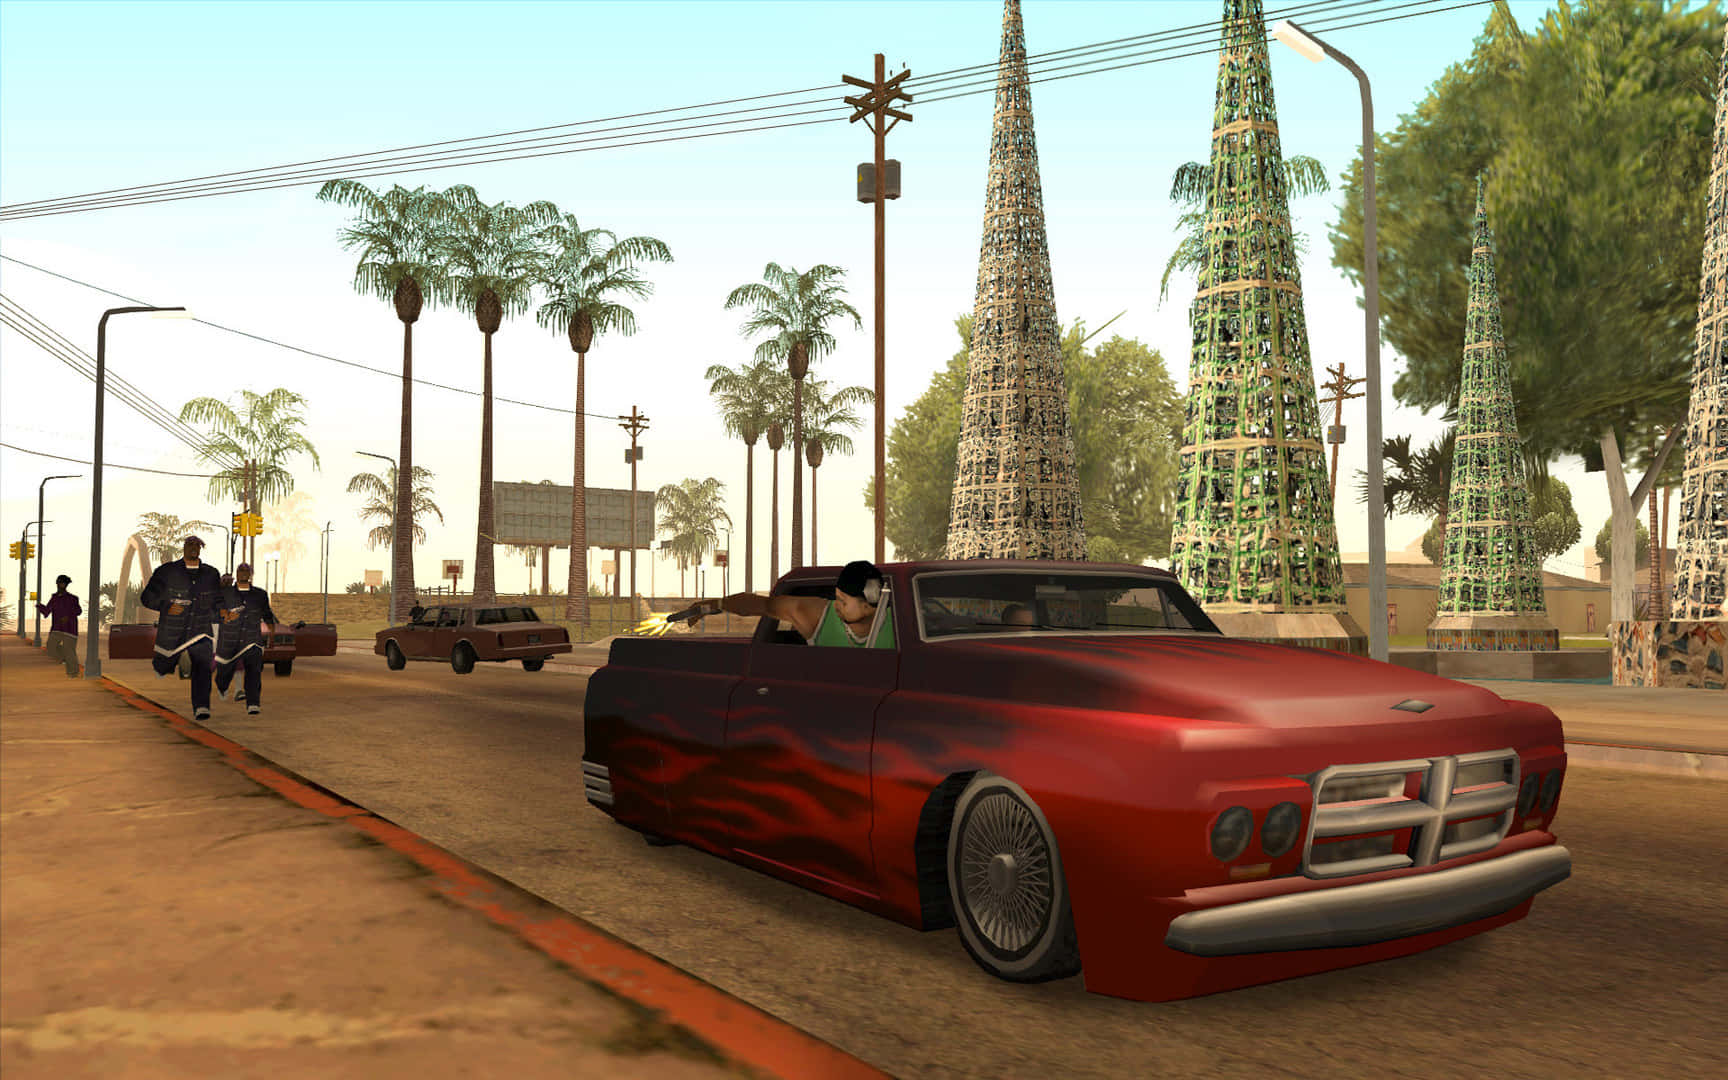 Losangeles-bild Av Bil I Gta (grand Theft Auto)